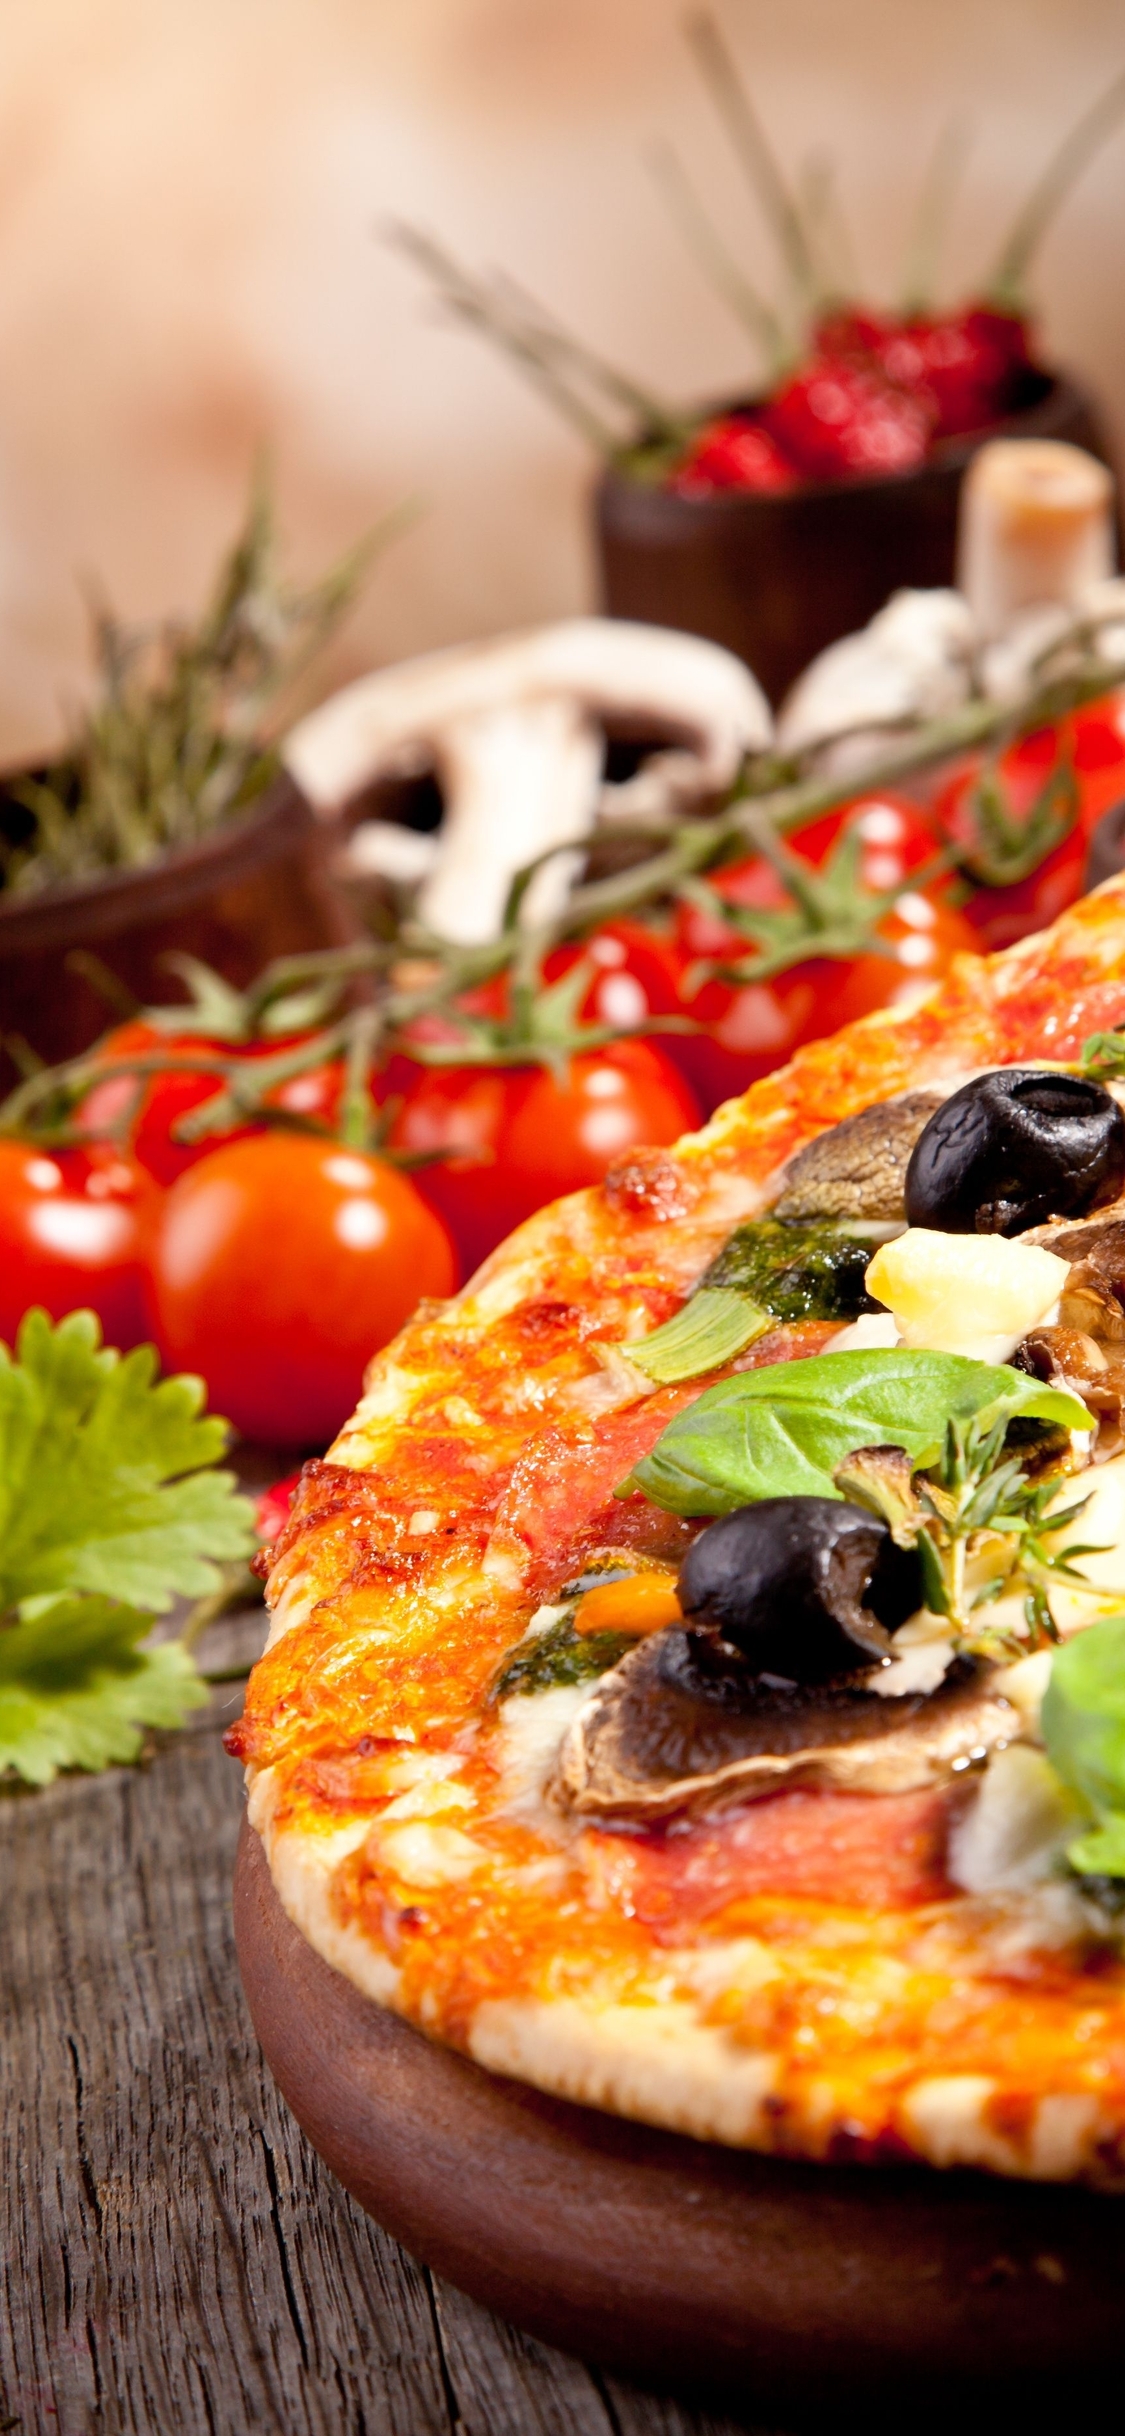 Image: Pizza, olives, greens, tomatoes, mushrooms